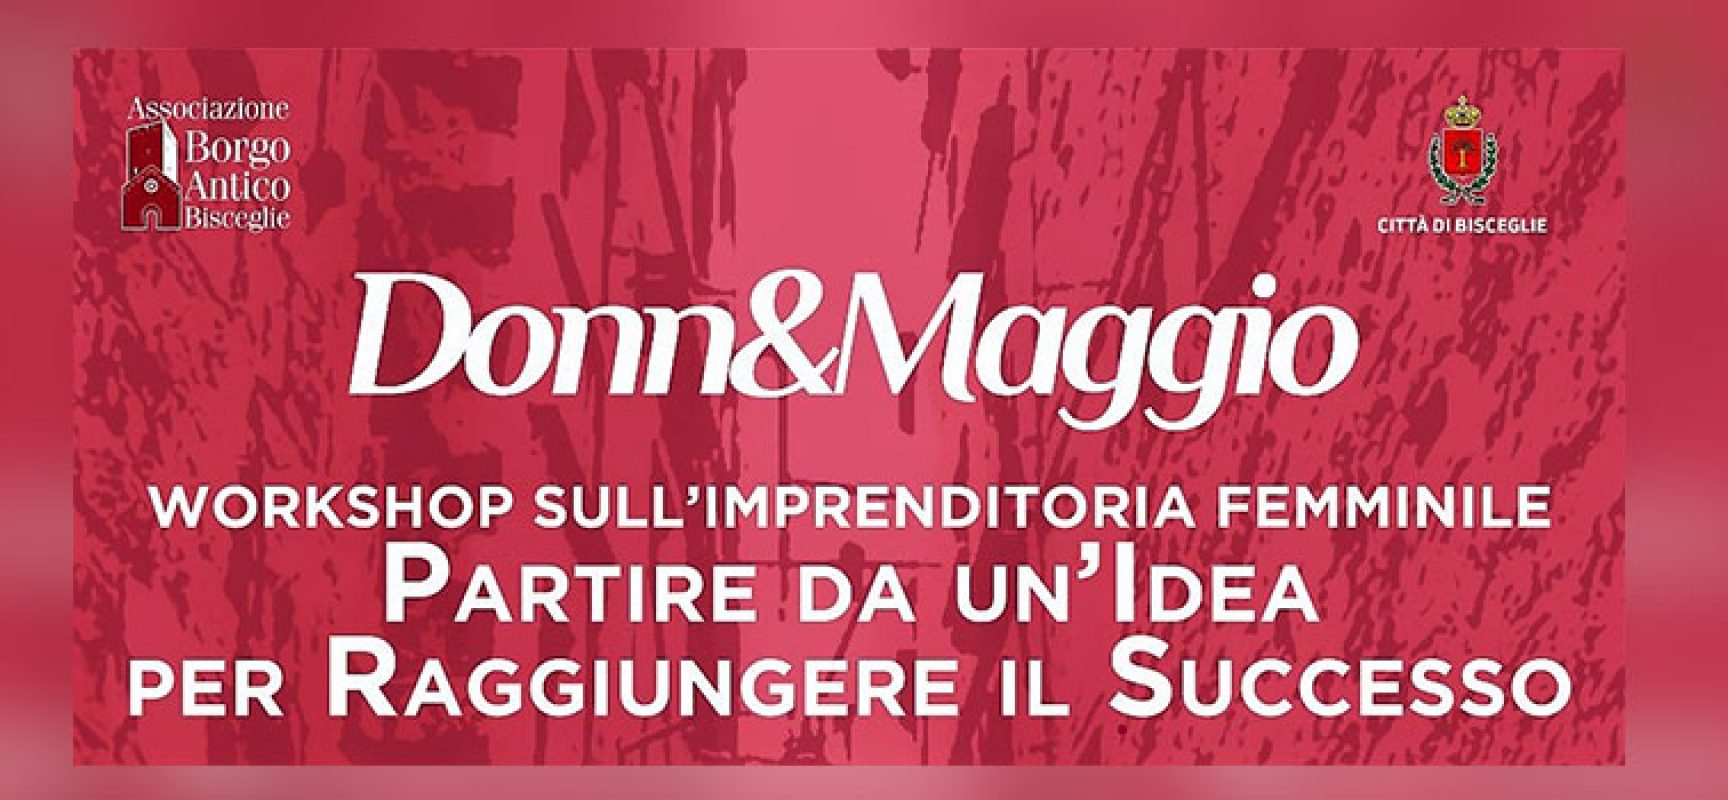 Donn&Maggio: workshop su imprenditoria femminile a Bisceglie